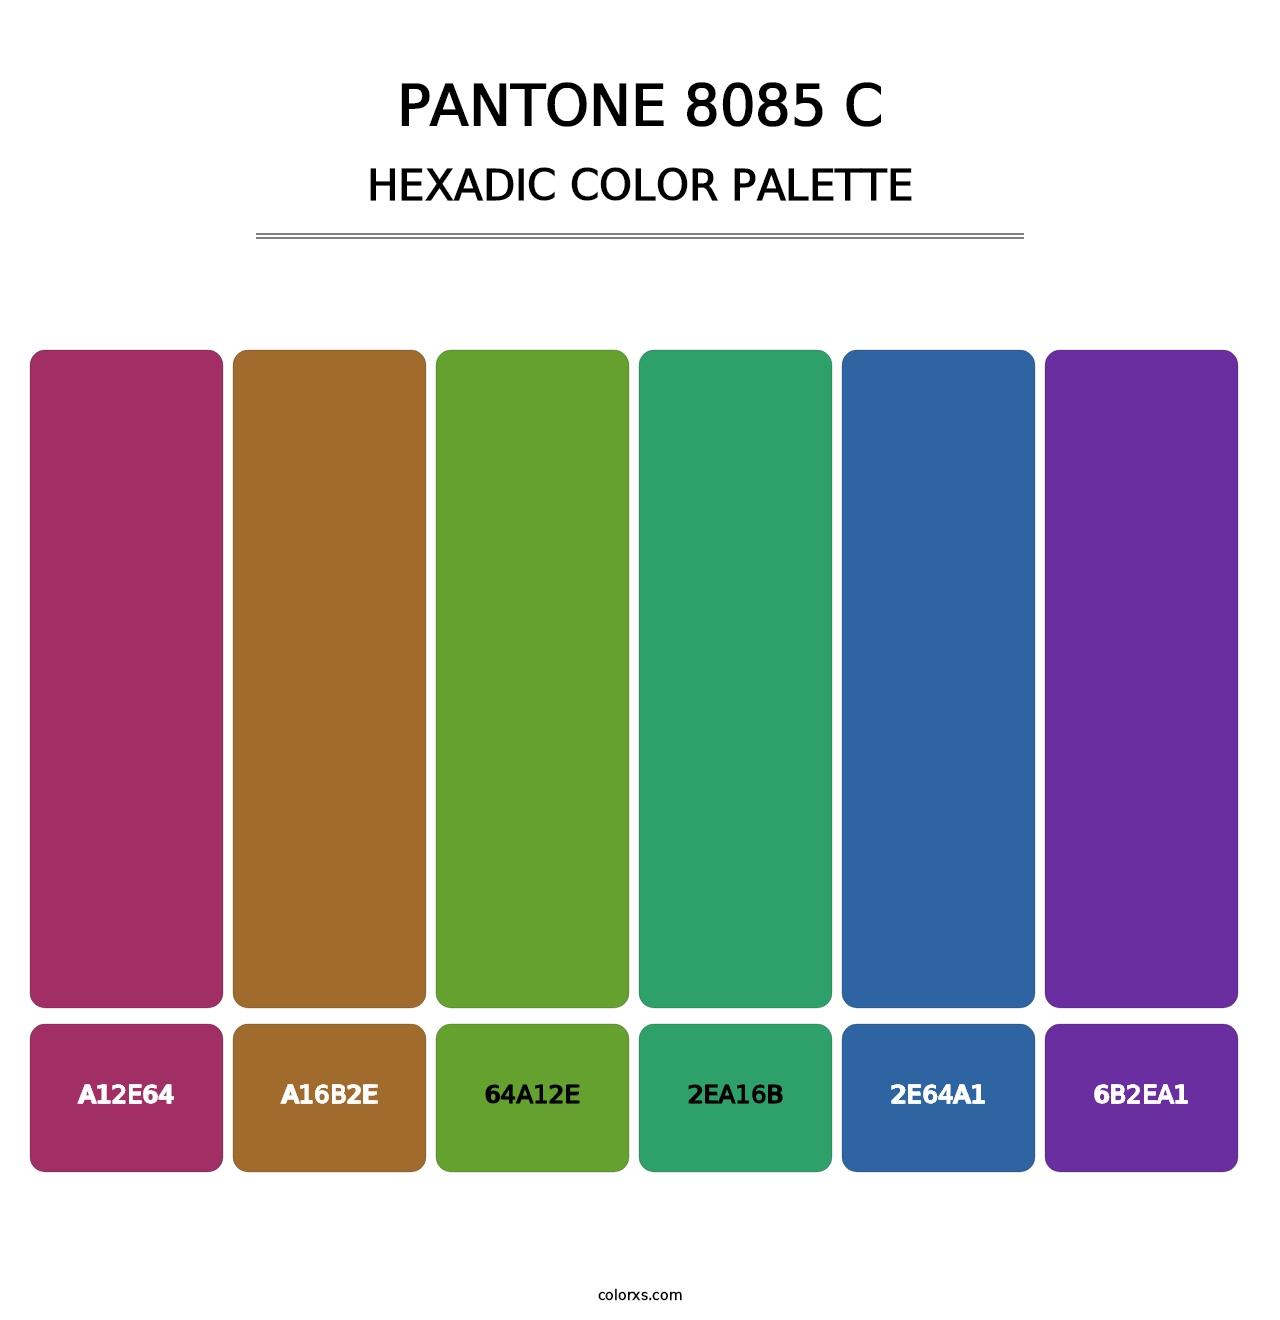 PANTONE 8085 C - Hexadic Color Palette